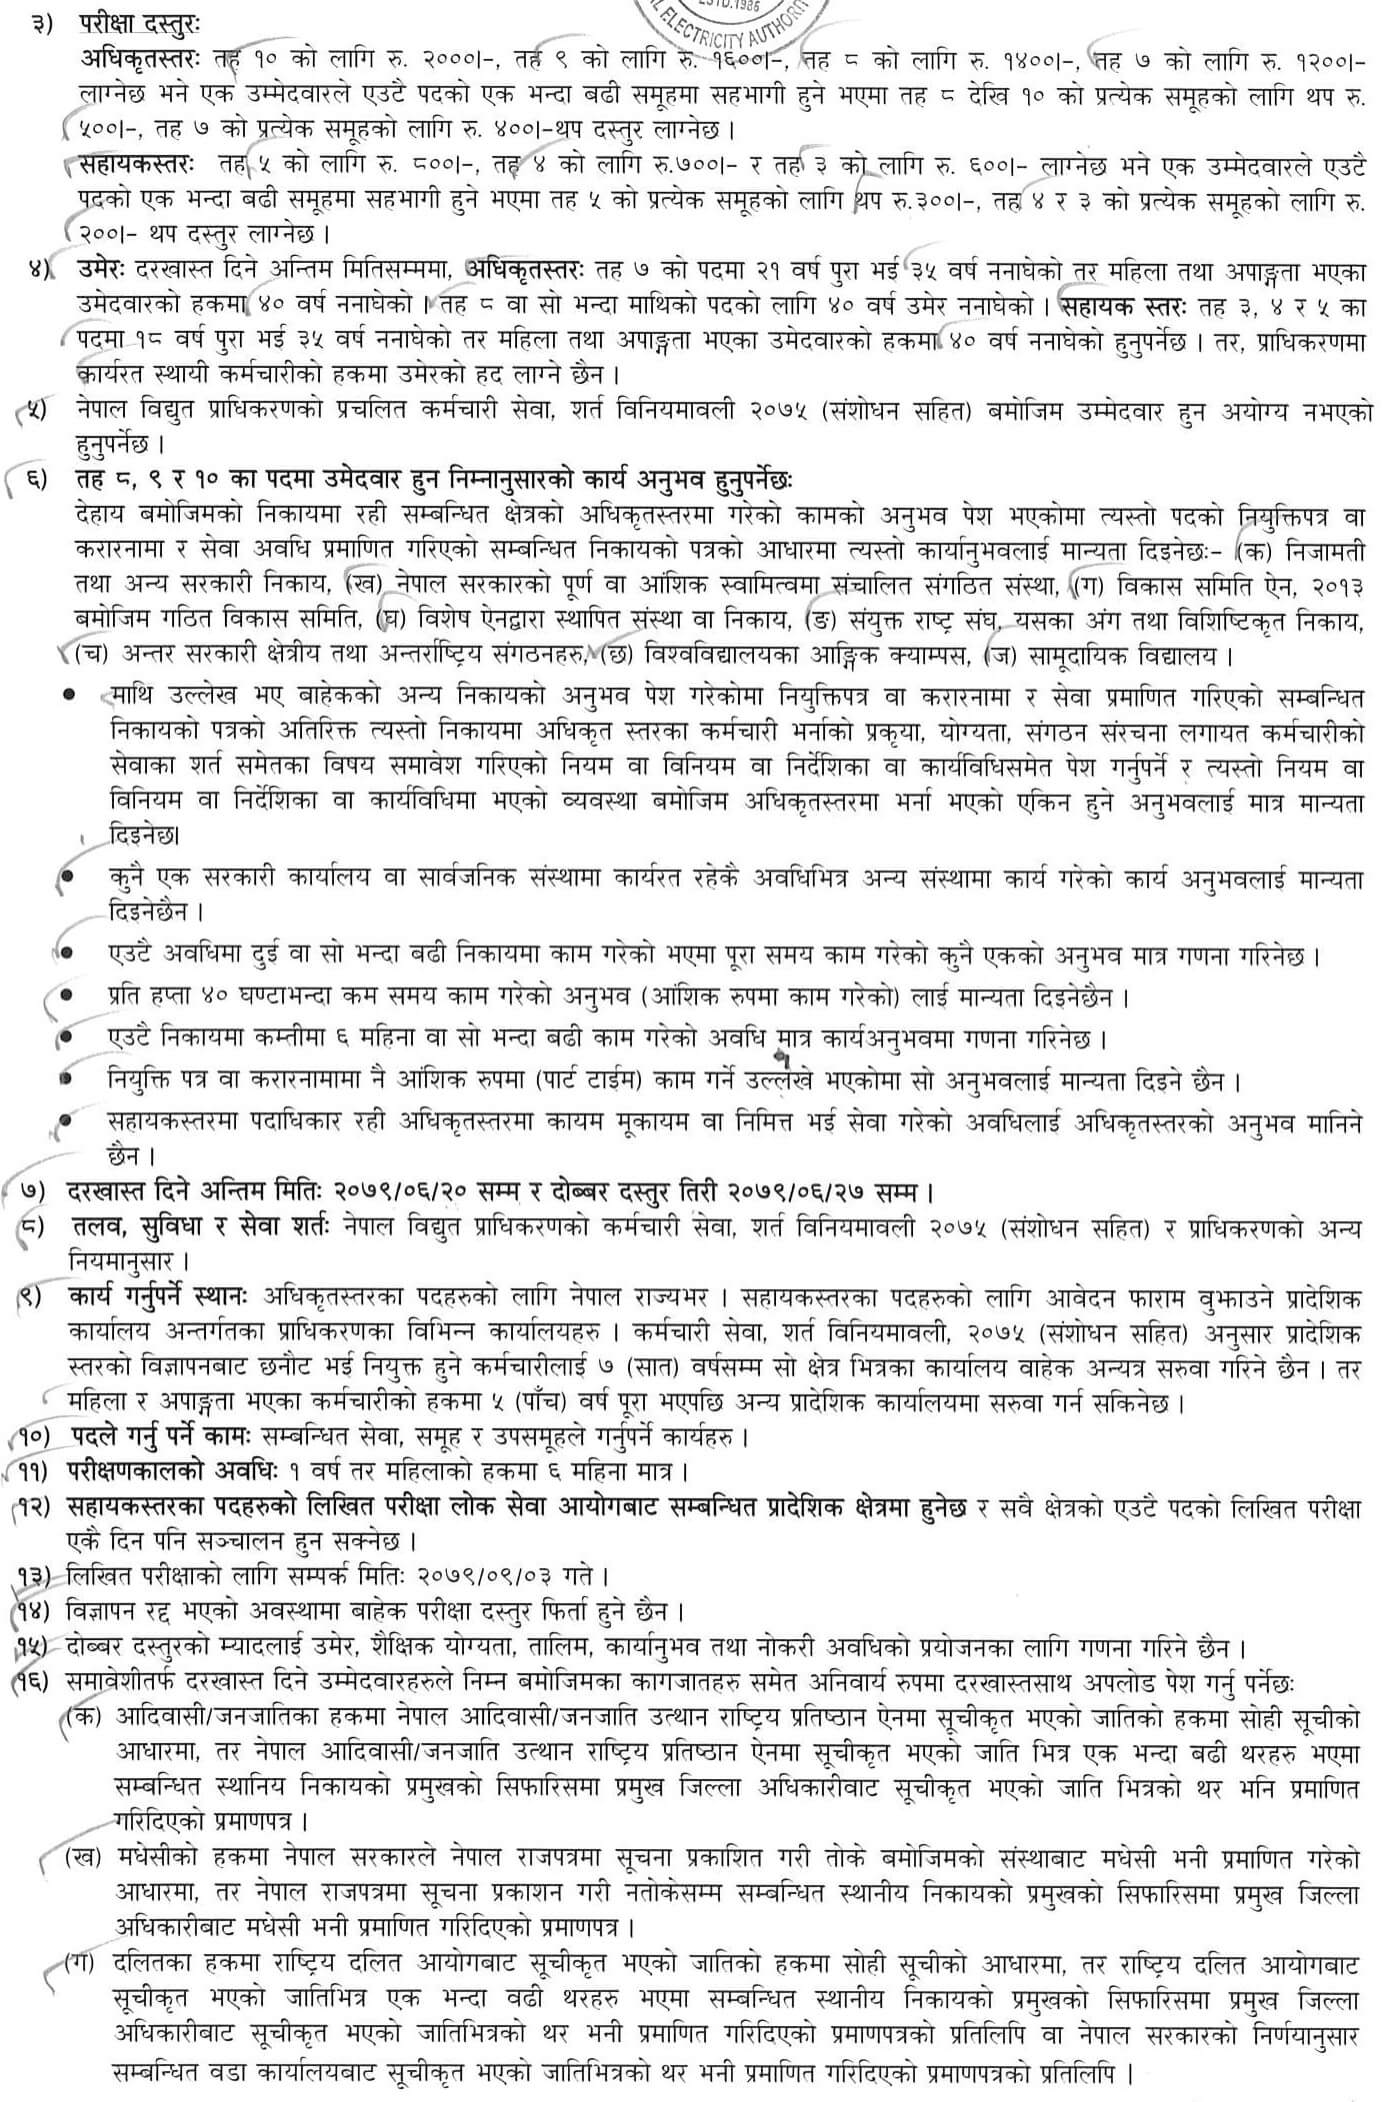 Nepal Electricity Authority Vacancy 2079